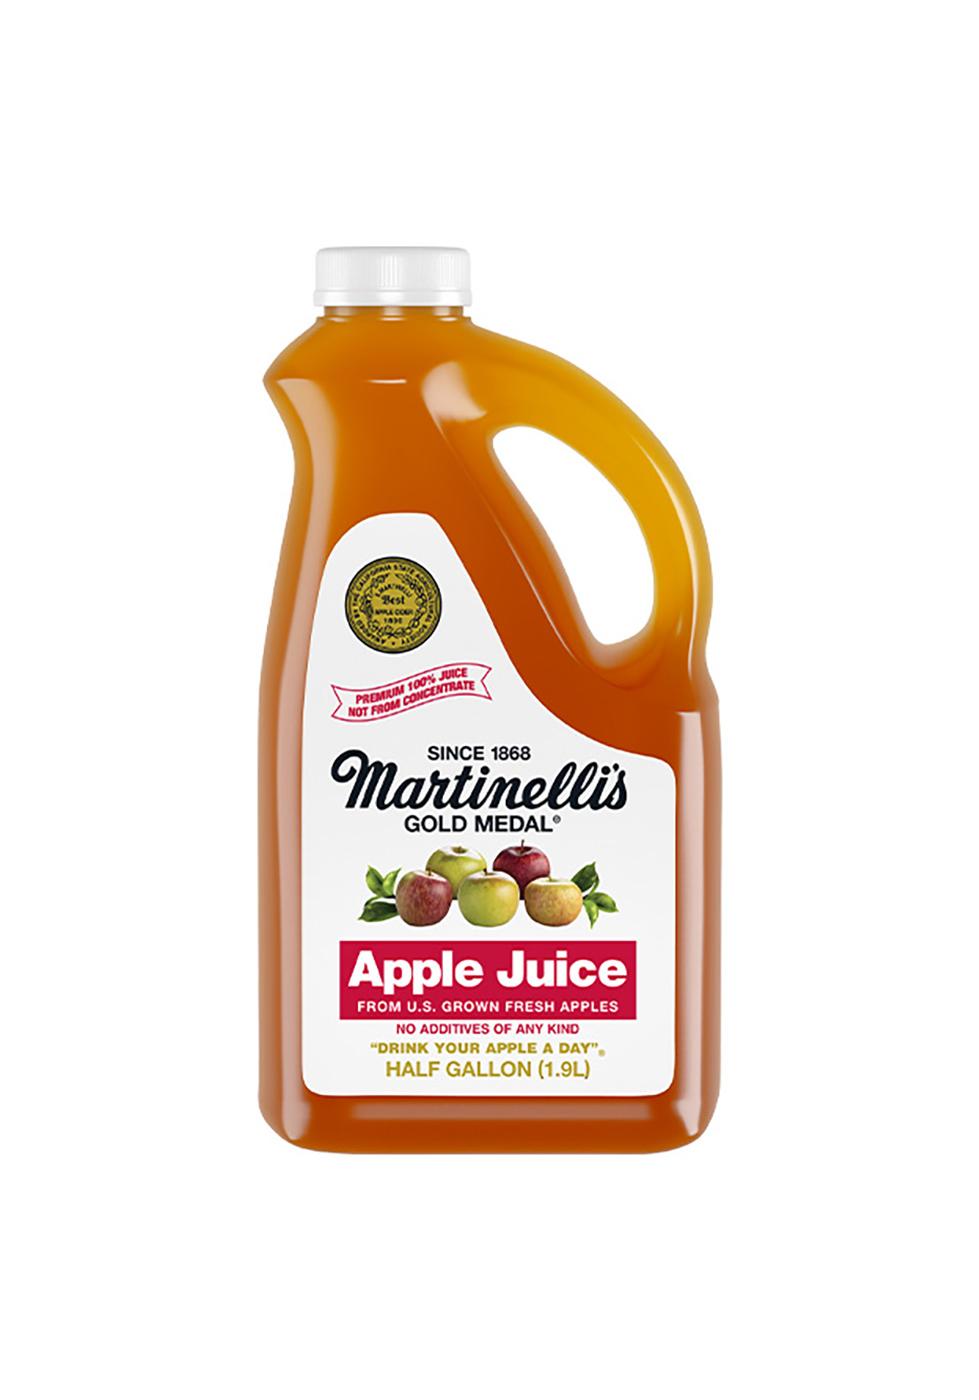 Martinelli's Apple Juice; image 1 of 2